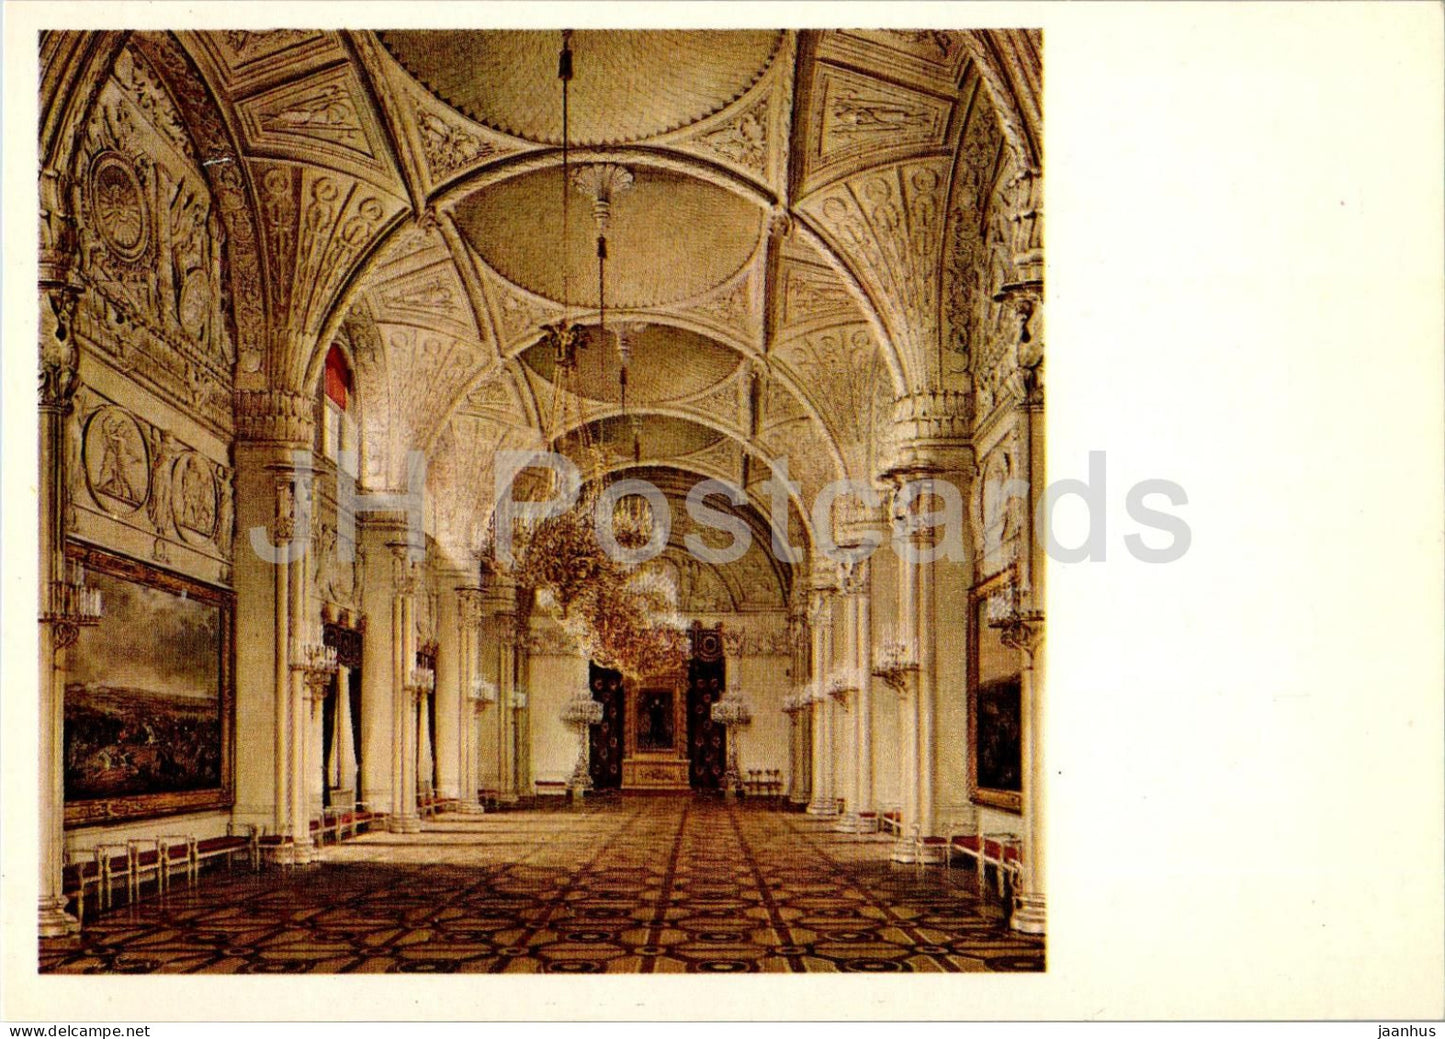 Leningrad - St Petersburg - Winter Palace - Alexander Hall - painting by Hau - 1975 - Russia USSR - unused - JH Postcards